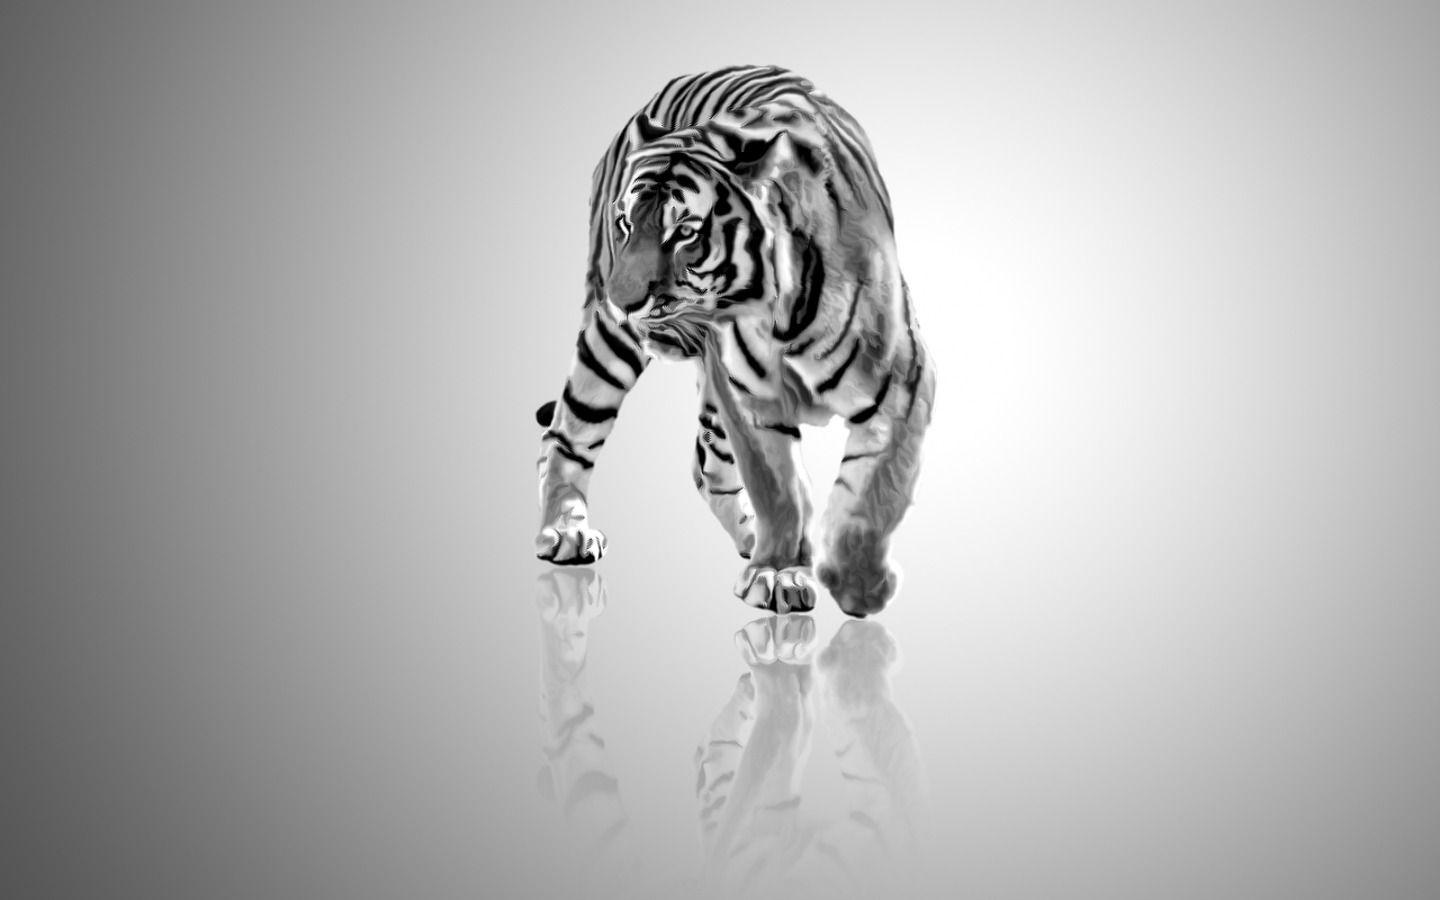 White Tiger Wallpaper, 49 Desktop Image of White Tiger. White